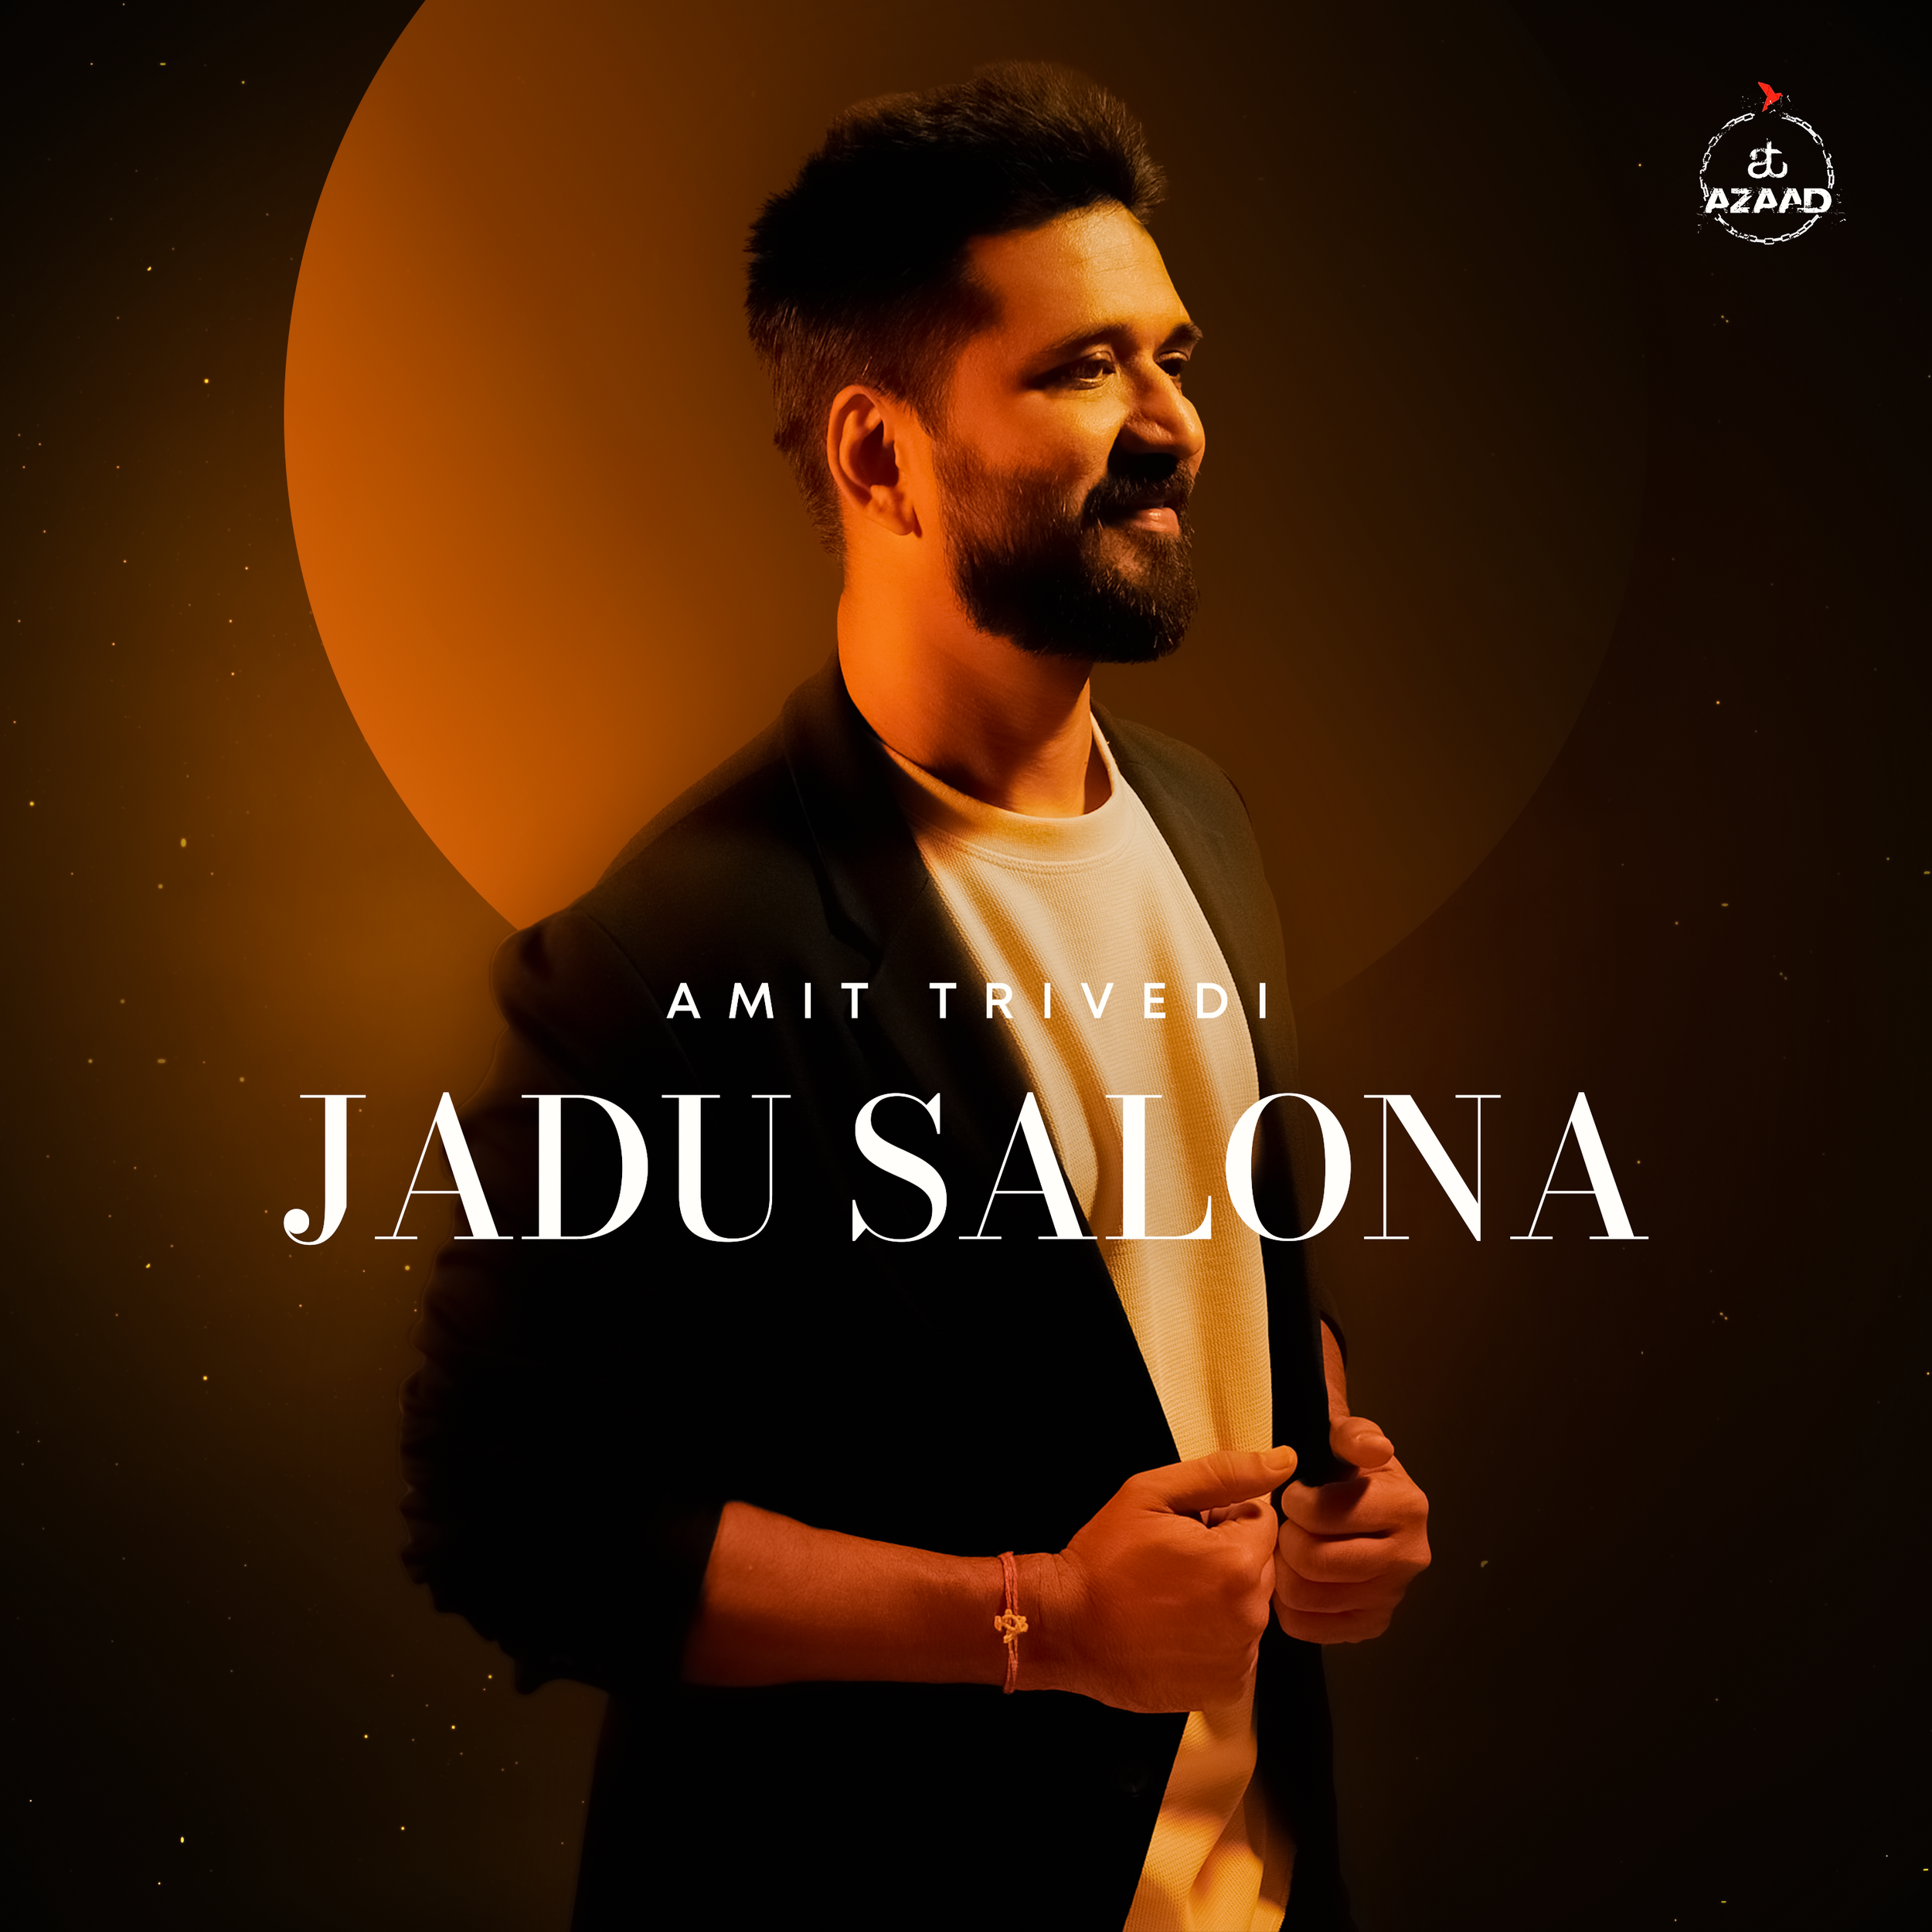 Amit Trivedi - Jadu Salona EP Artwork - 7.png